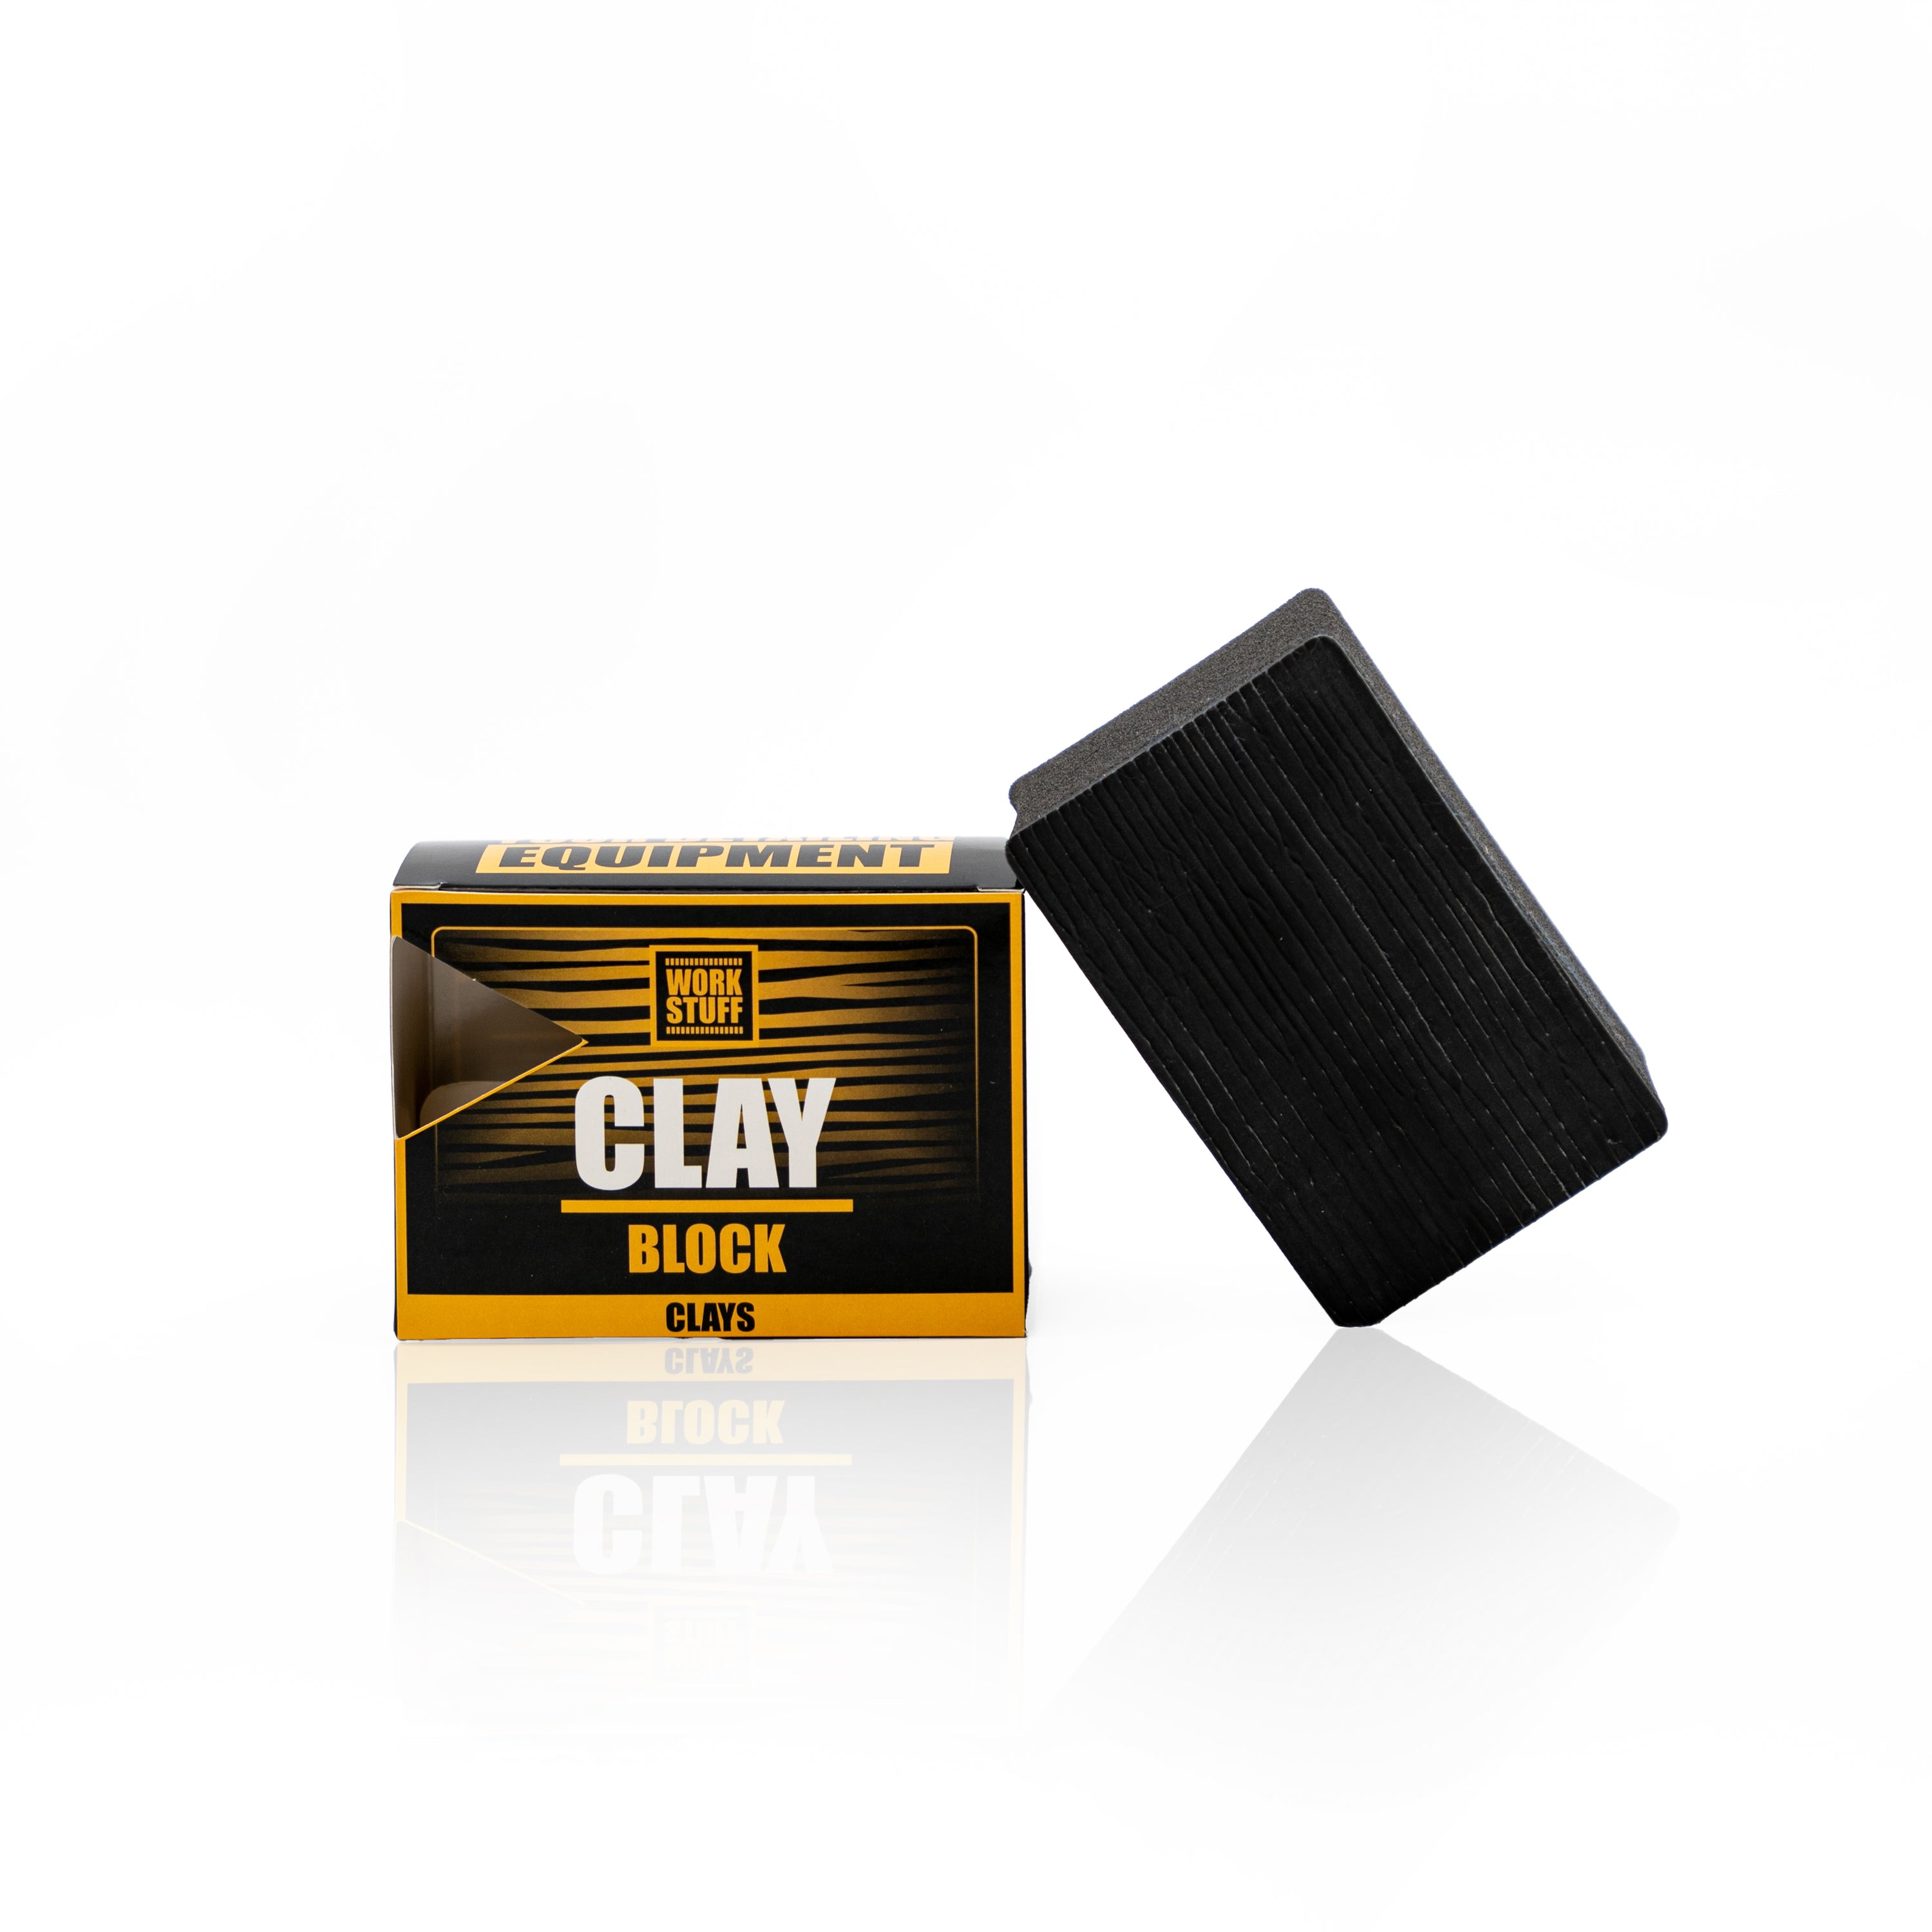 WORKSTUFF - Clay Block (Decontamination Block)